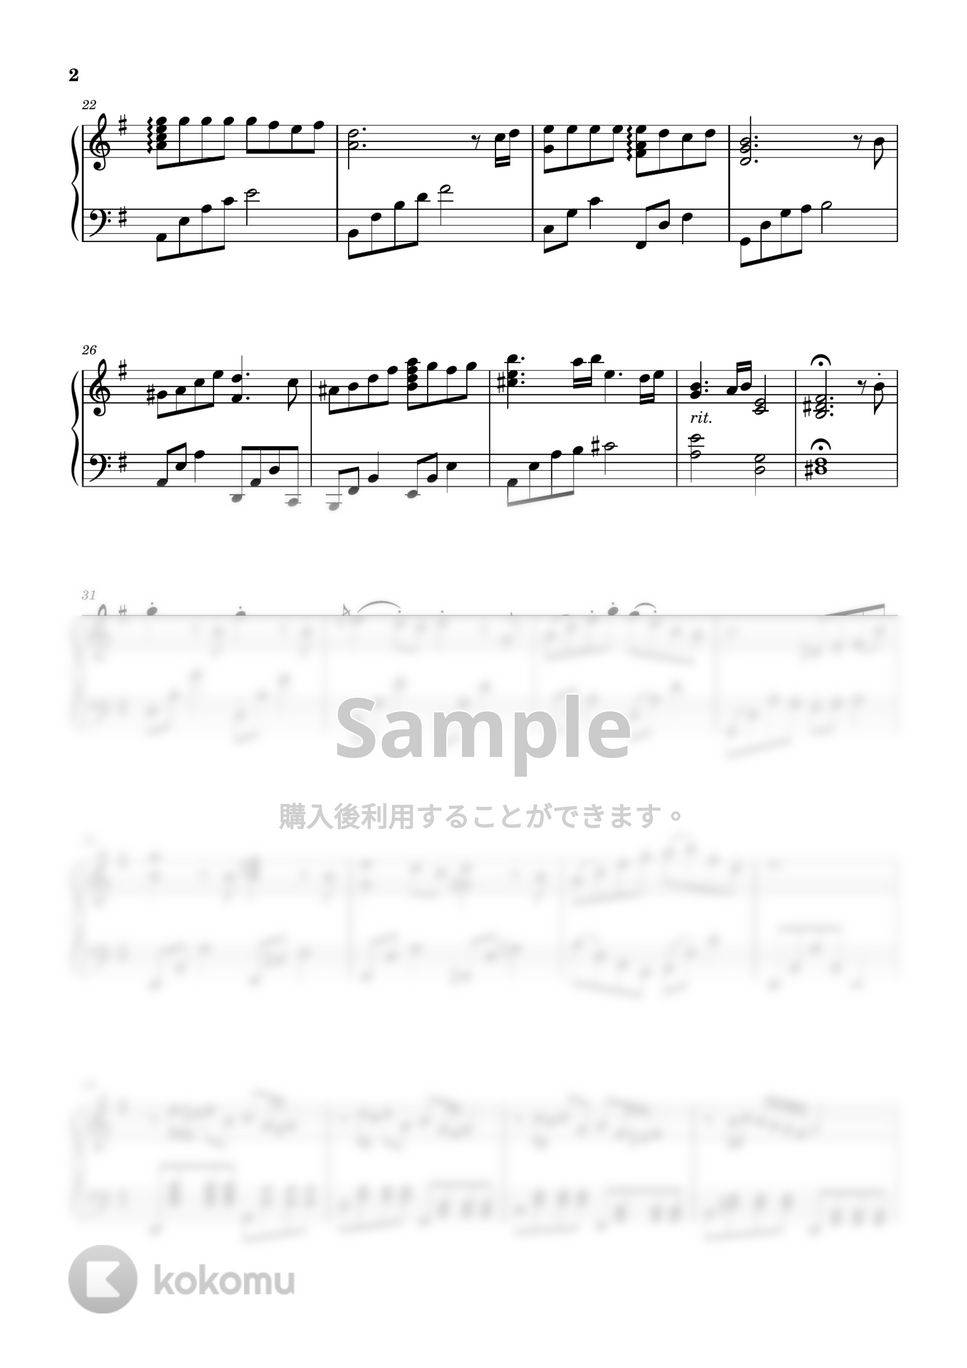 hisaishi joe - 海の見える街 (魔女の宅急便 Kiki's Delivery Service OST) by hellopiano